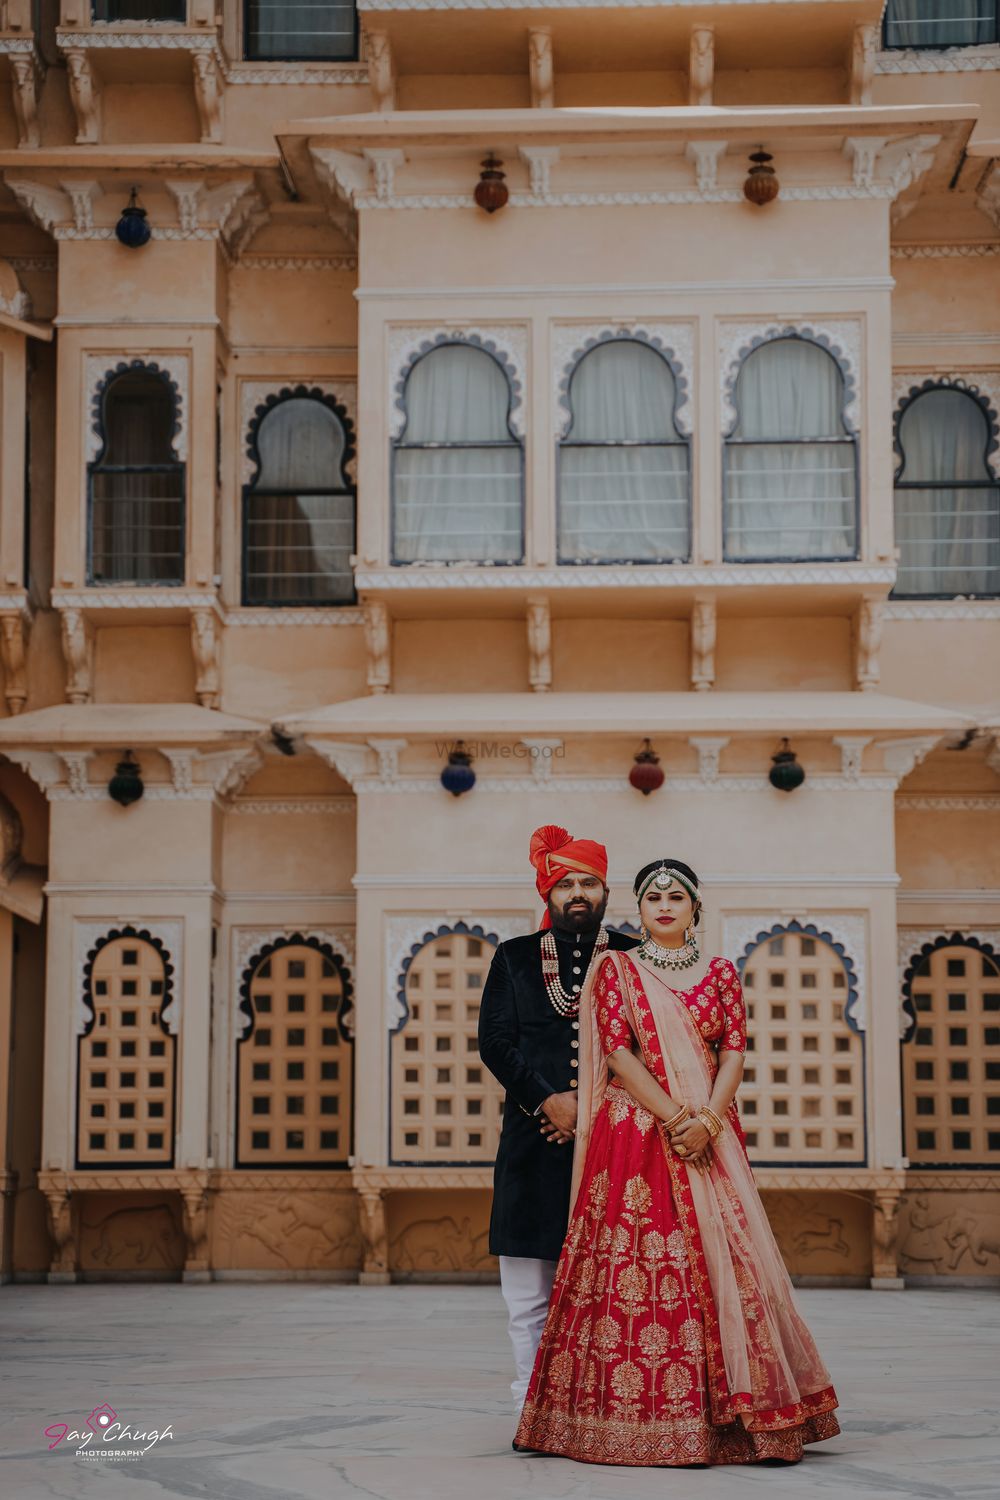 Photo From Pre Wedding | Prachi + Parijat - By Jay Chugh Photography